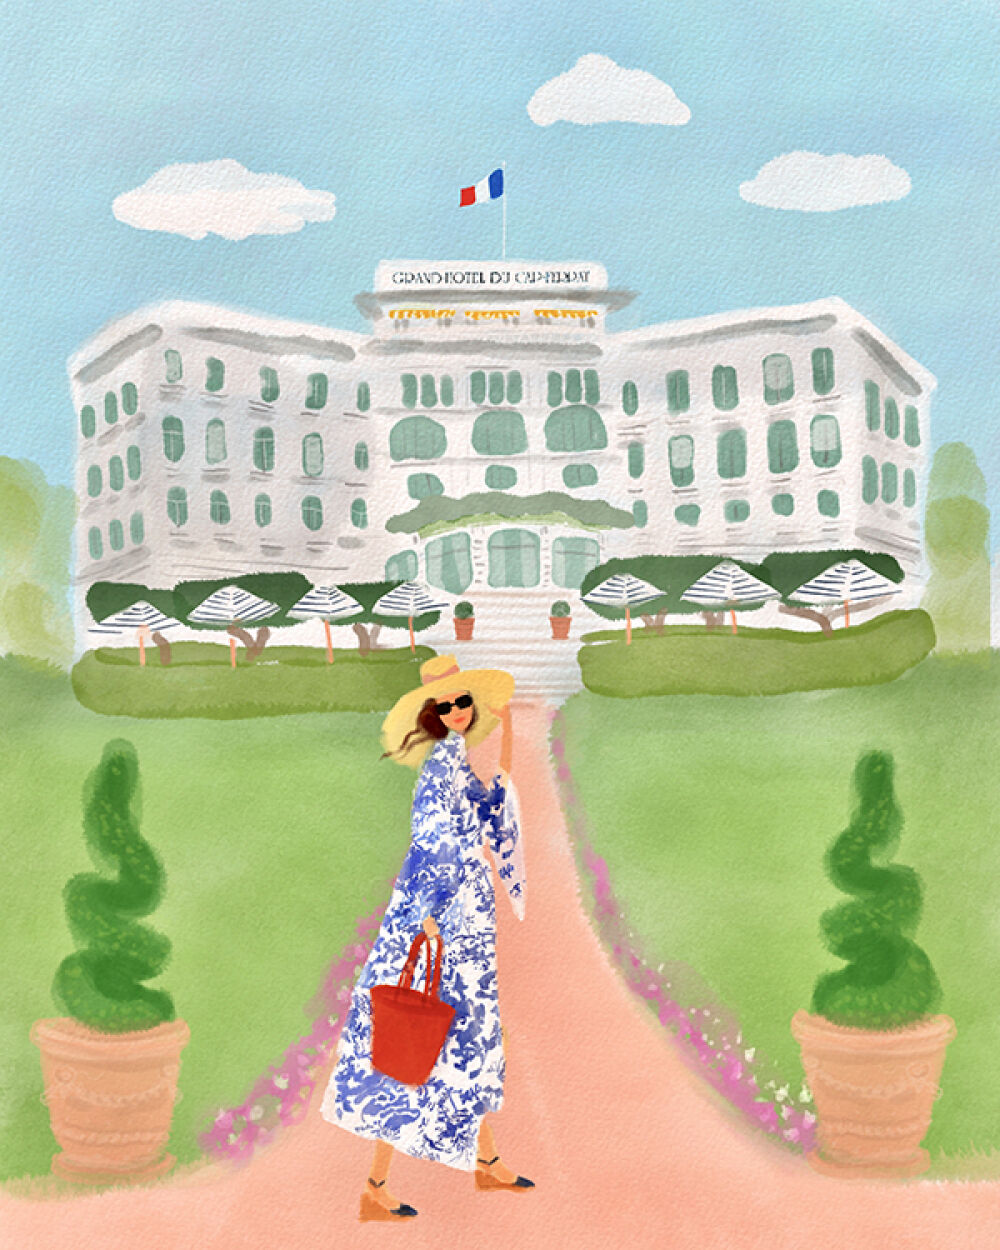 Advertising illustration for the Grand Hotel Du Cap Ferrat by Christina Gliha